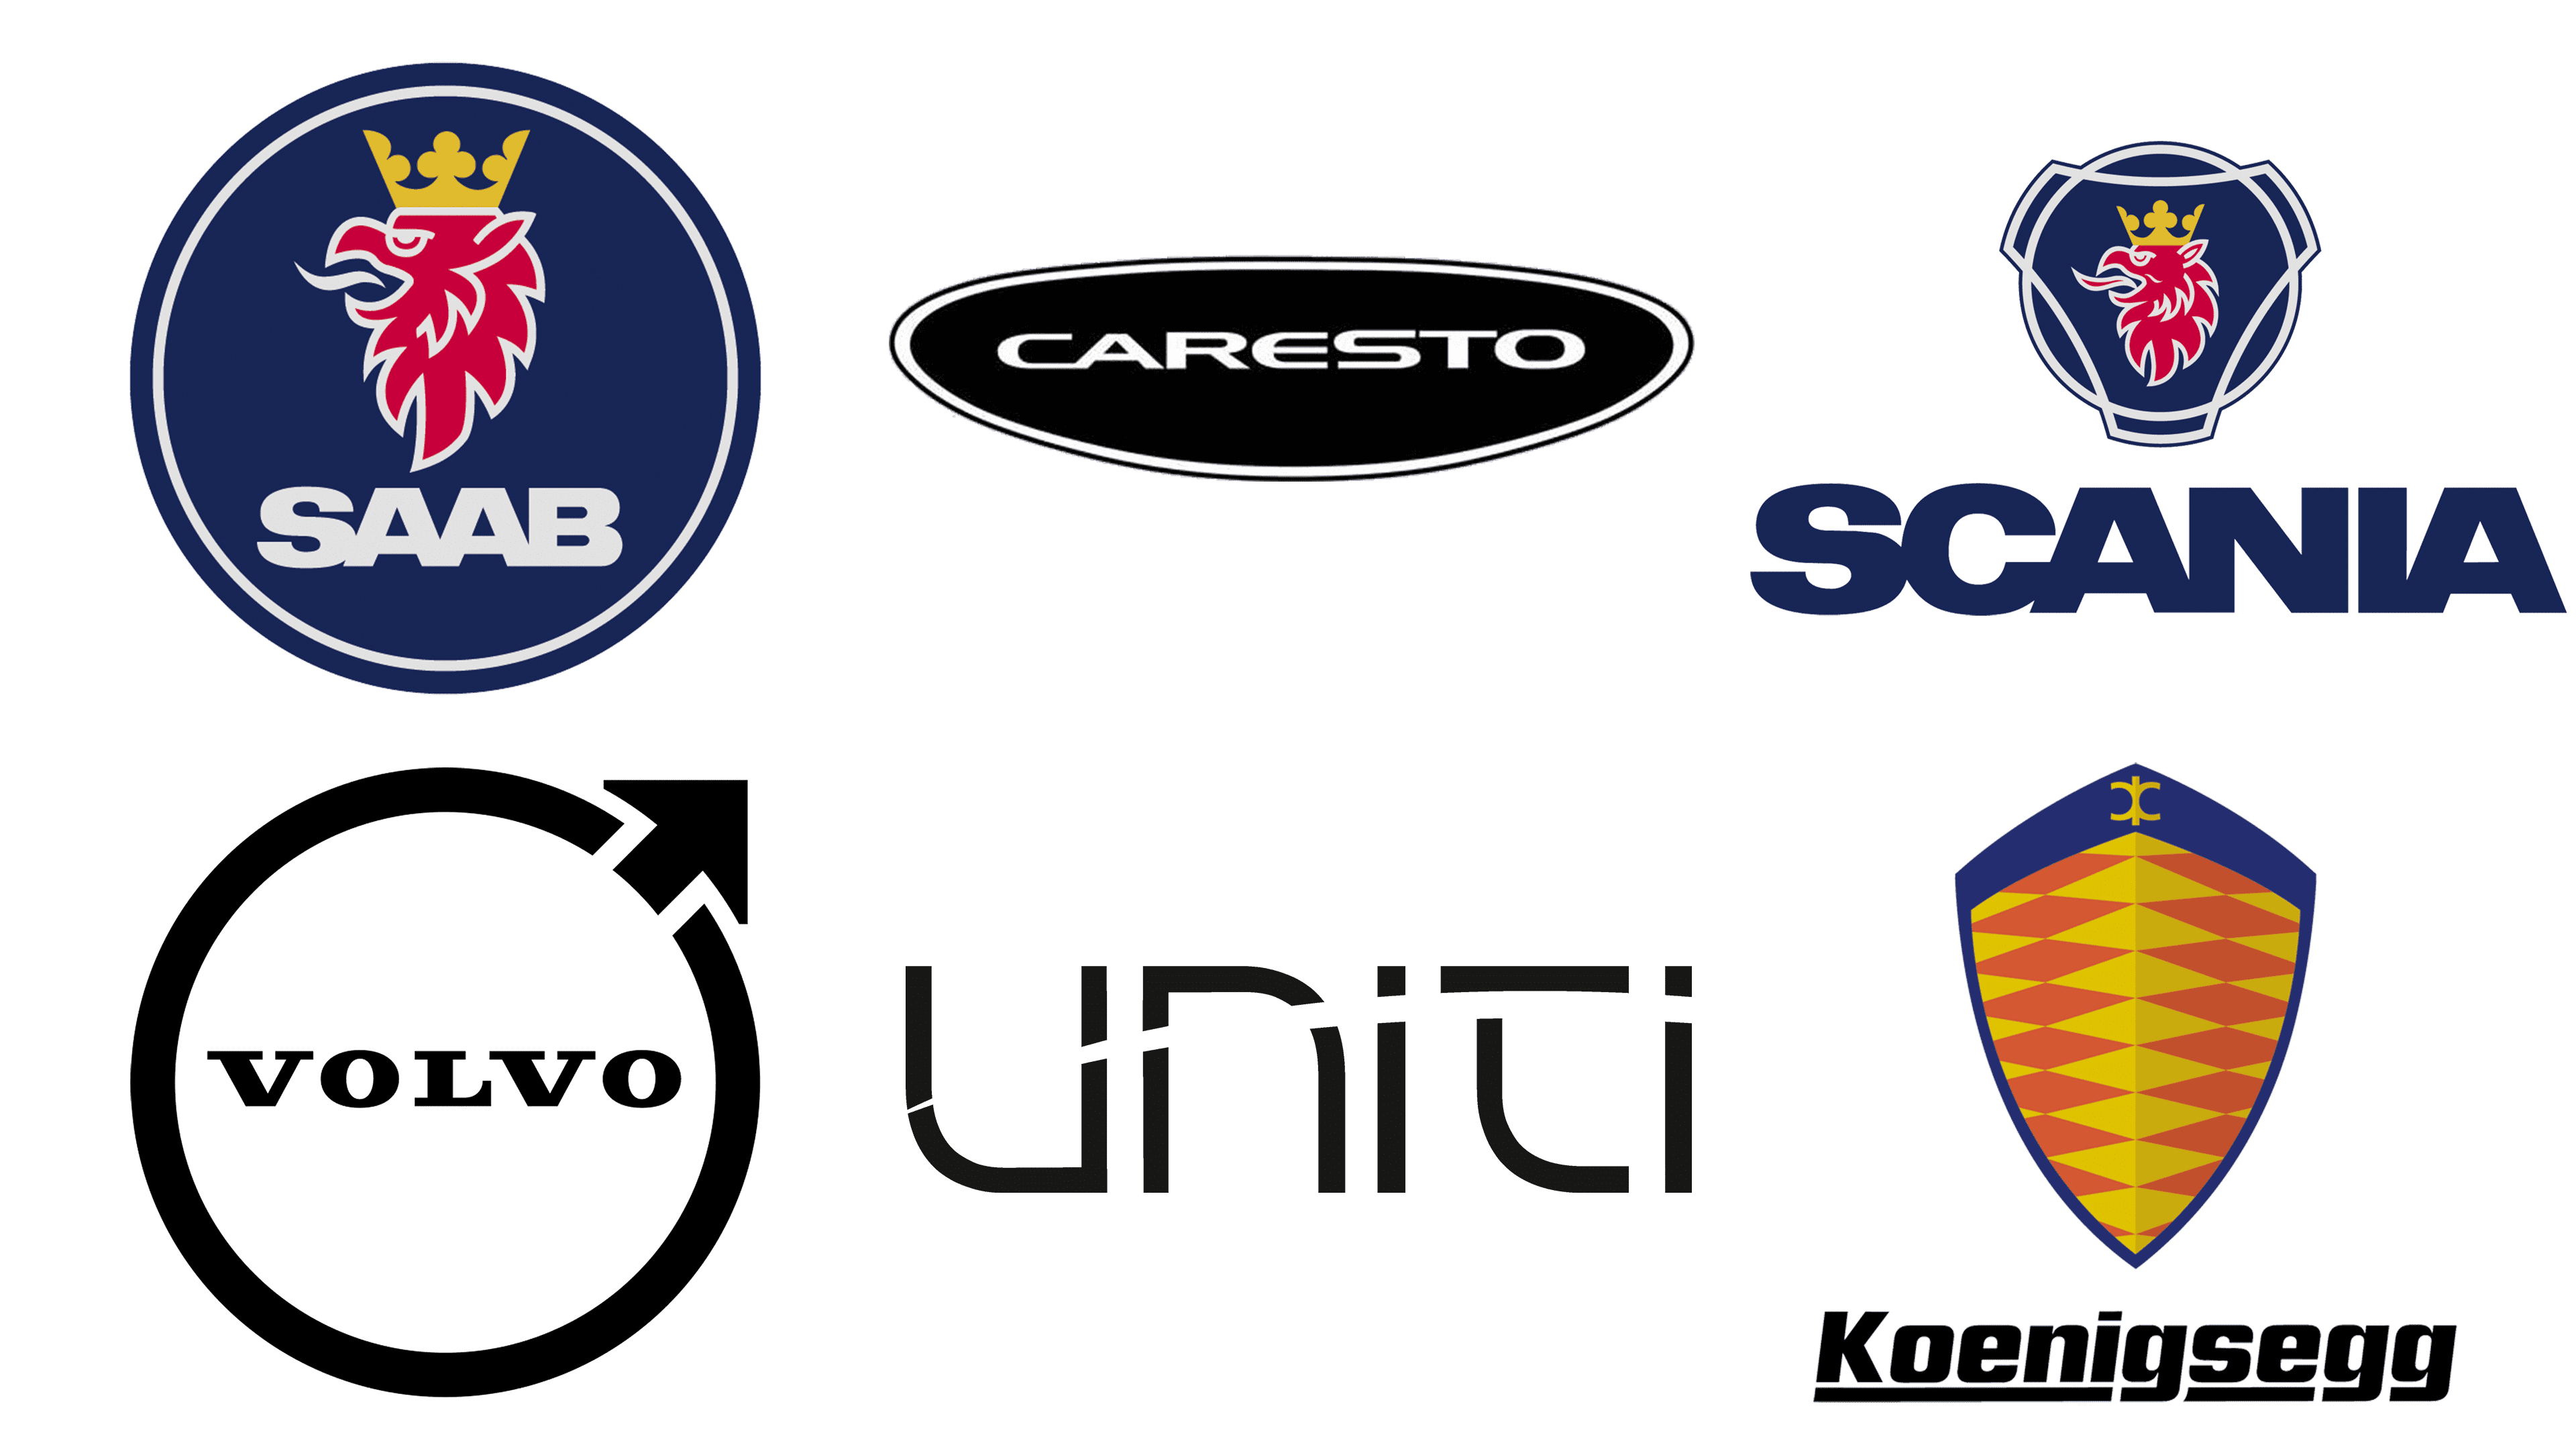 Swedish car manufacturers